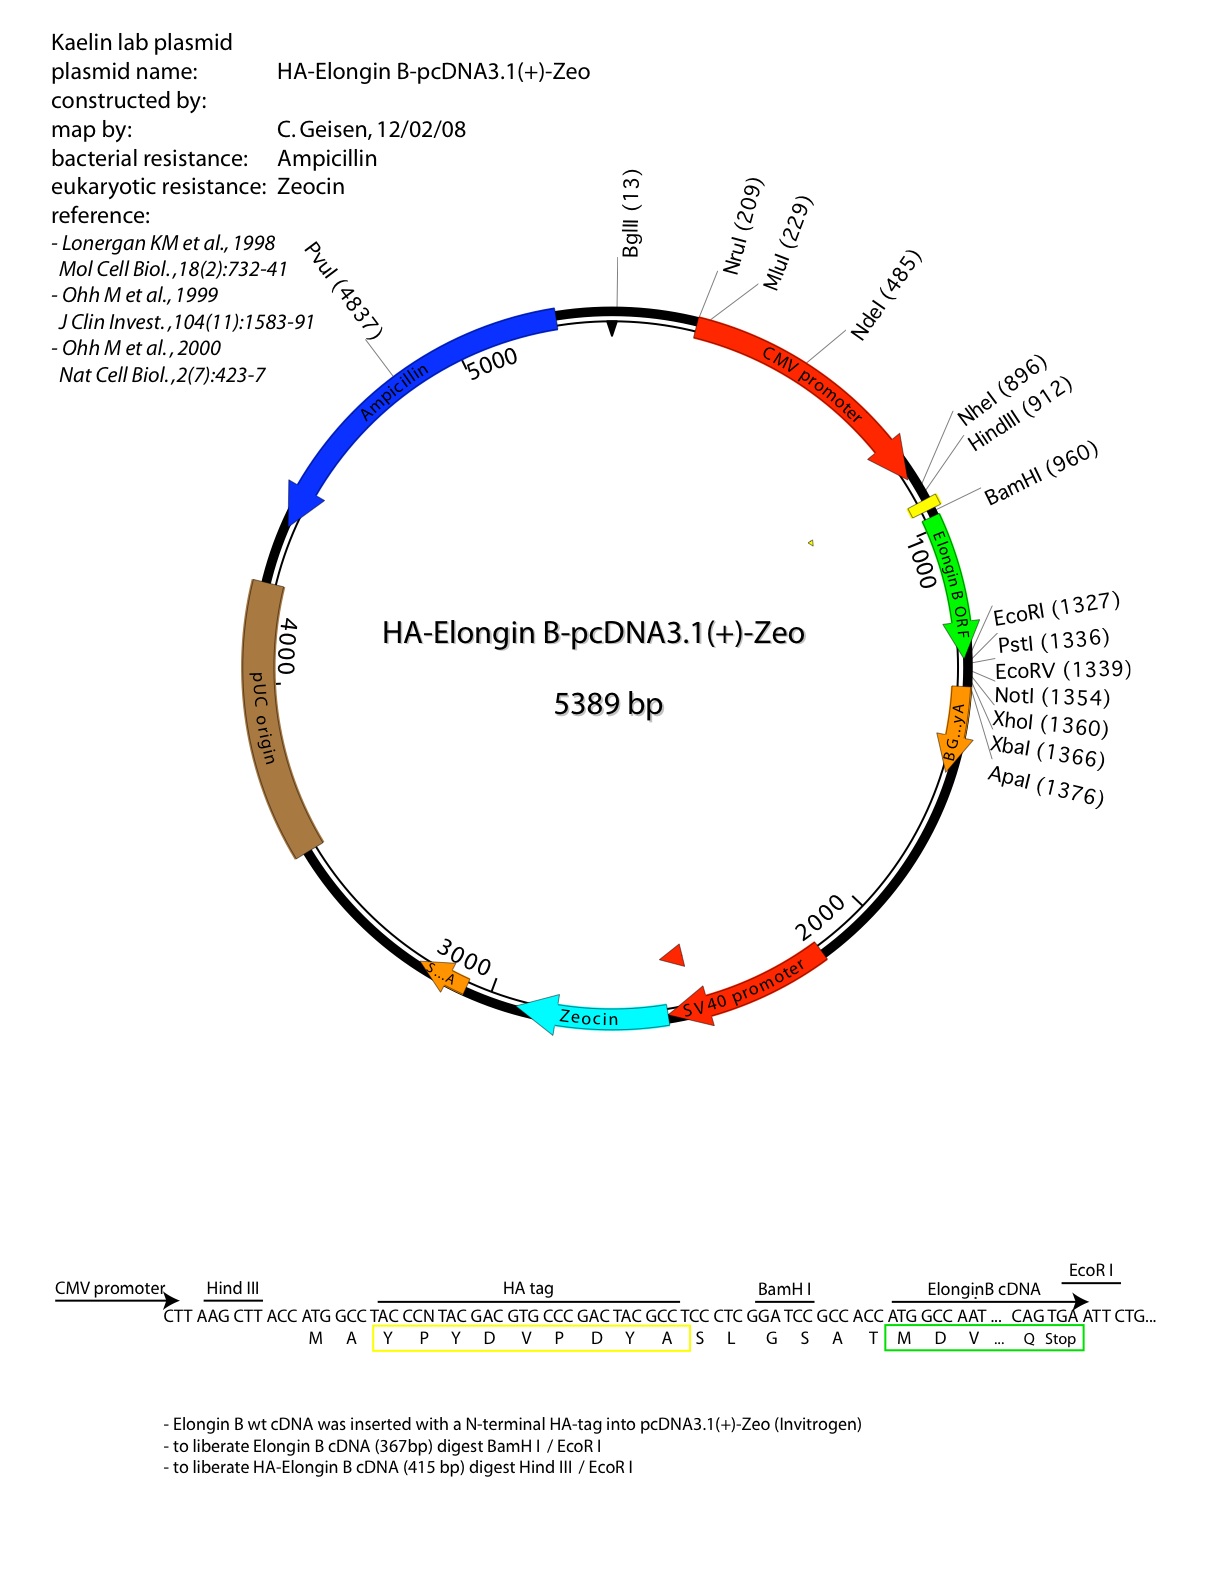 Addgene: HA-Elongin B-pcDNA3.1(+)-Zeo